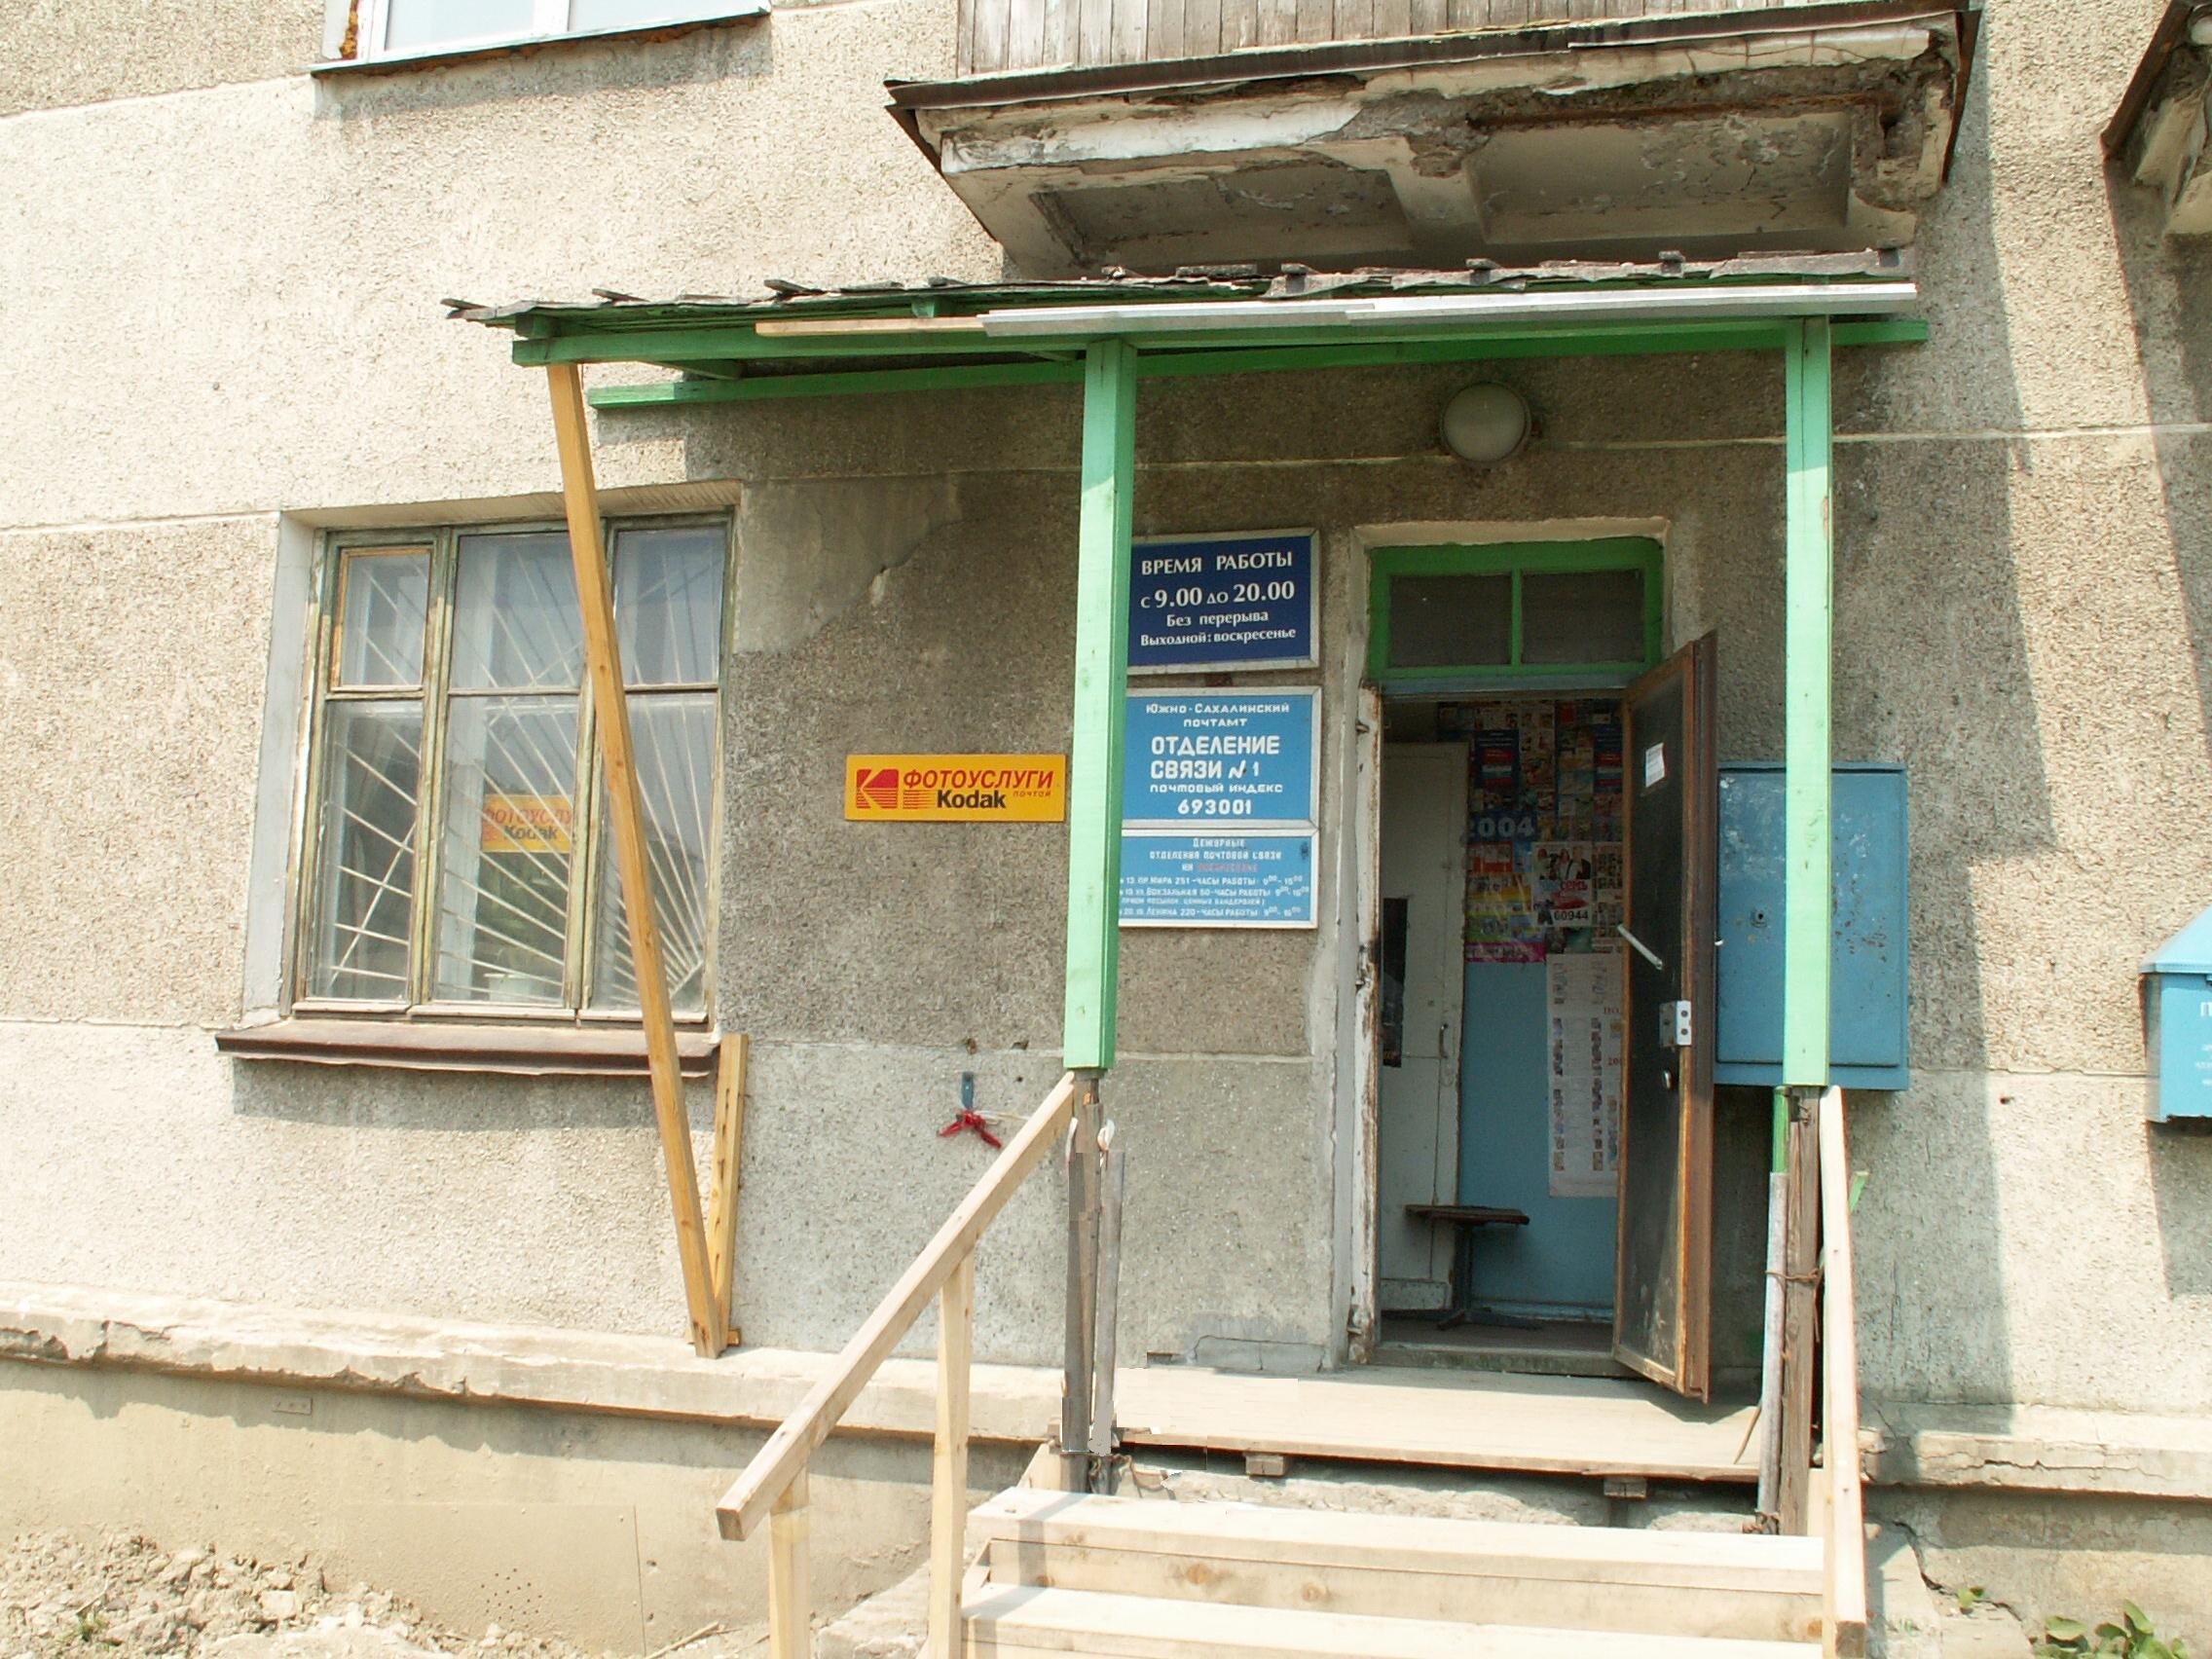 ВХОД, отделение почтовой связи 693001, Сахалинская обл., Южно-Сахалинск